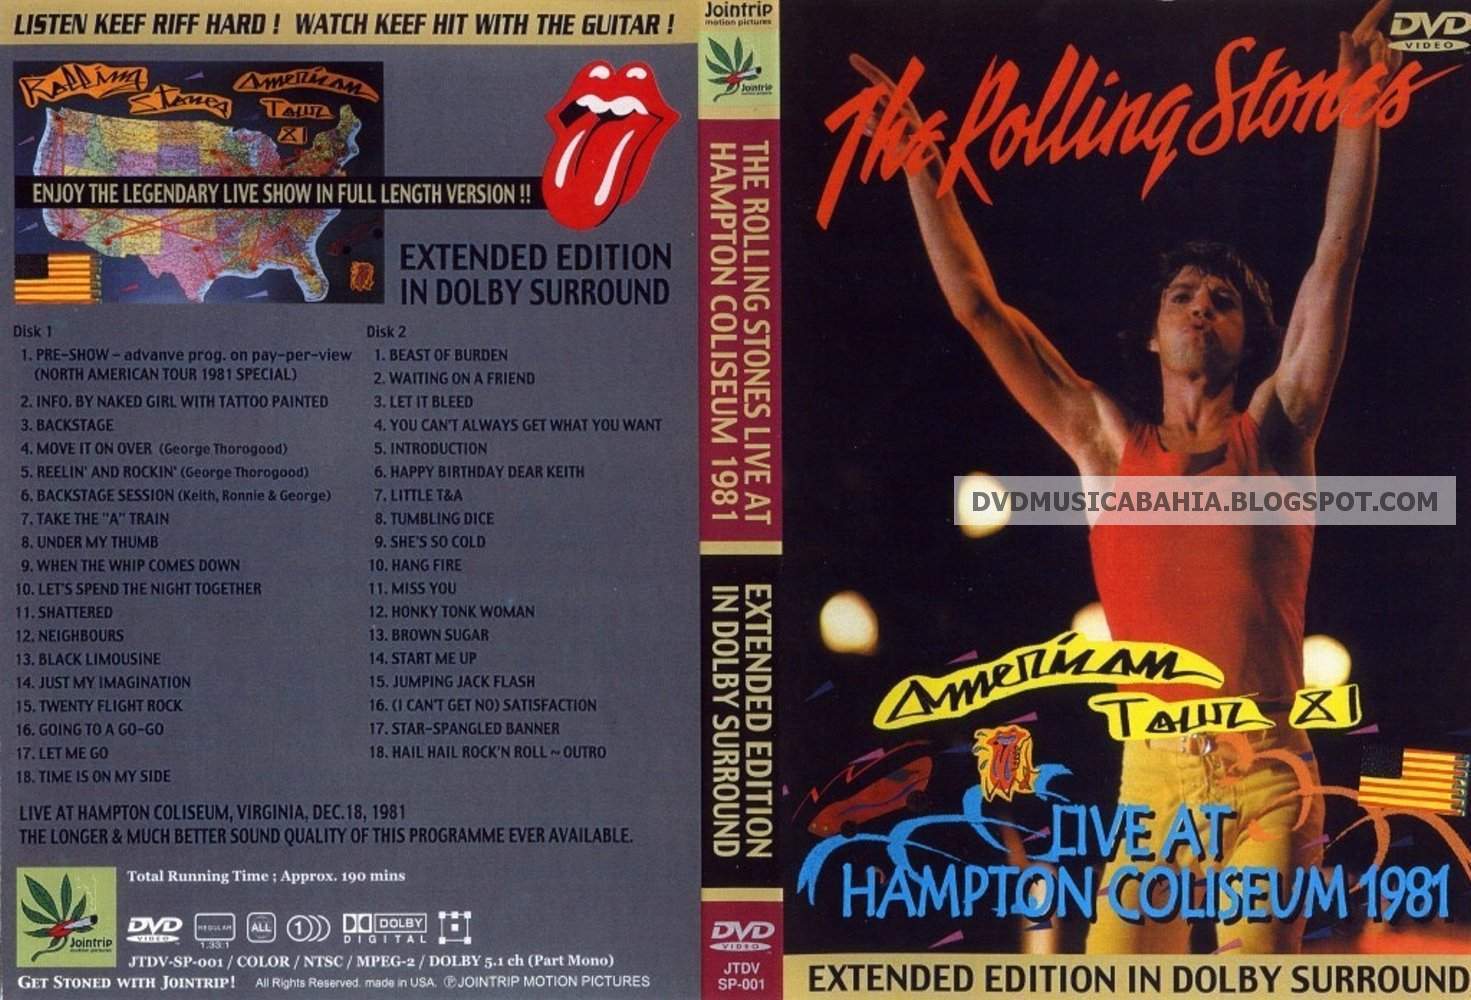 http://3.bp.blogspot.com/-xYoKKTUYJog/TWHYoD--tHI/AAAAAAAABfs/rNlZ_Rsqs-A/s1600/The+Rolling+Stones+-++Live+At+Hampton+Coliseum+1981.jpg